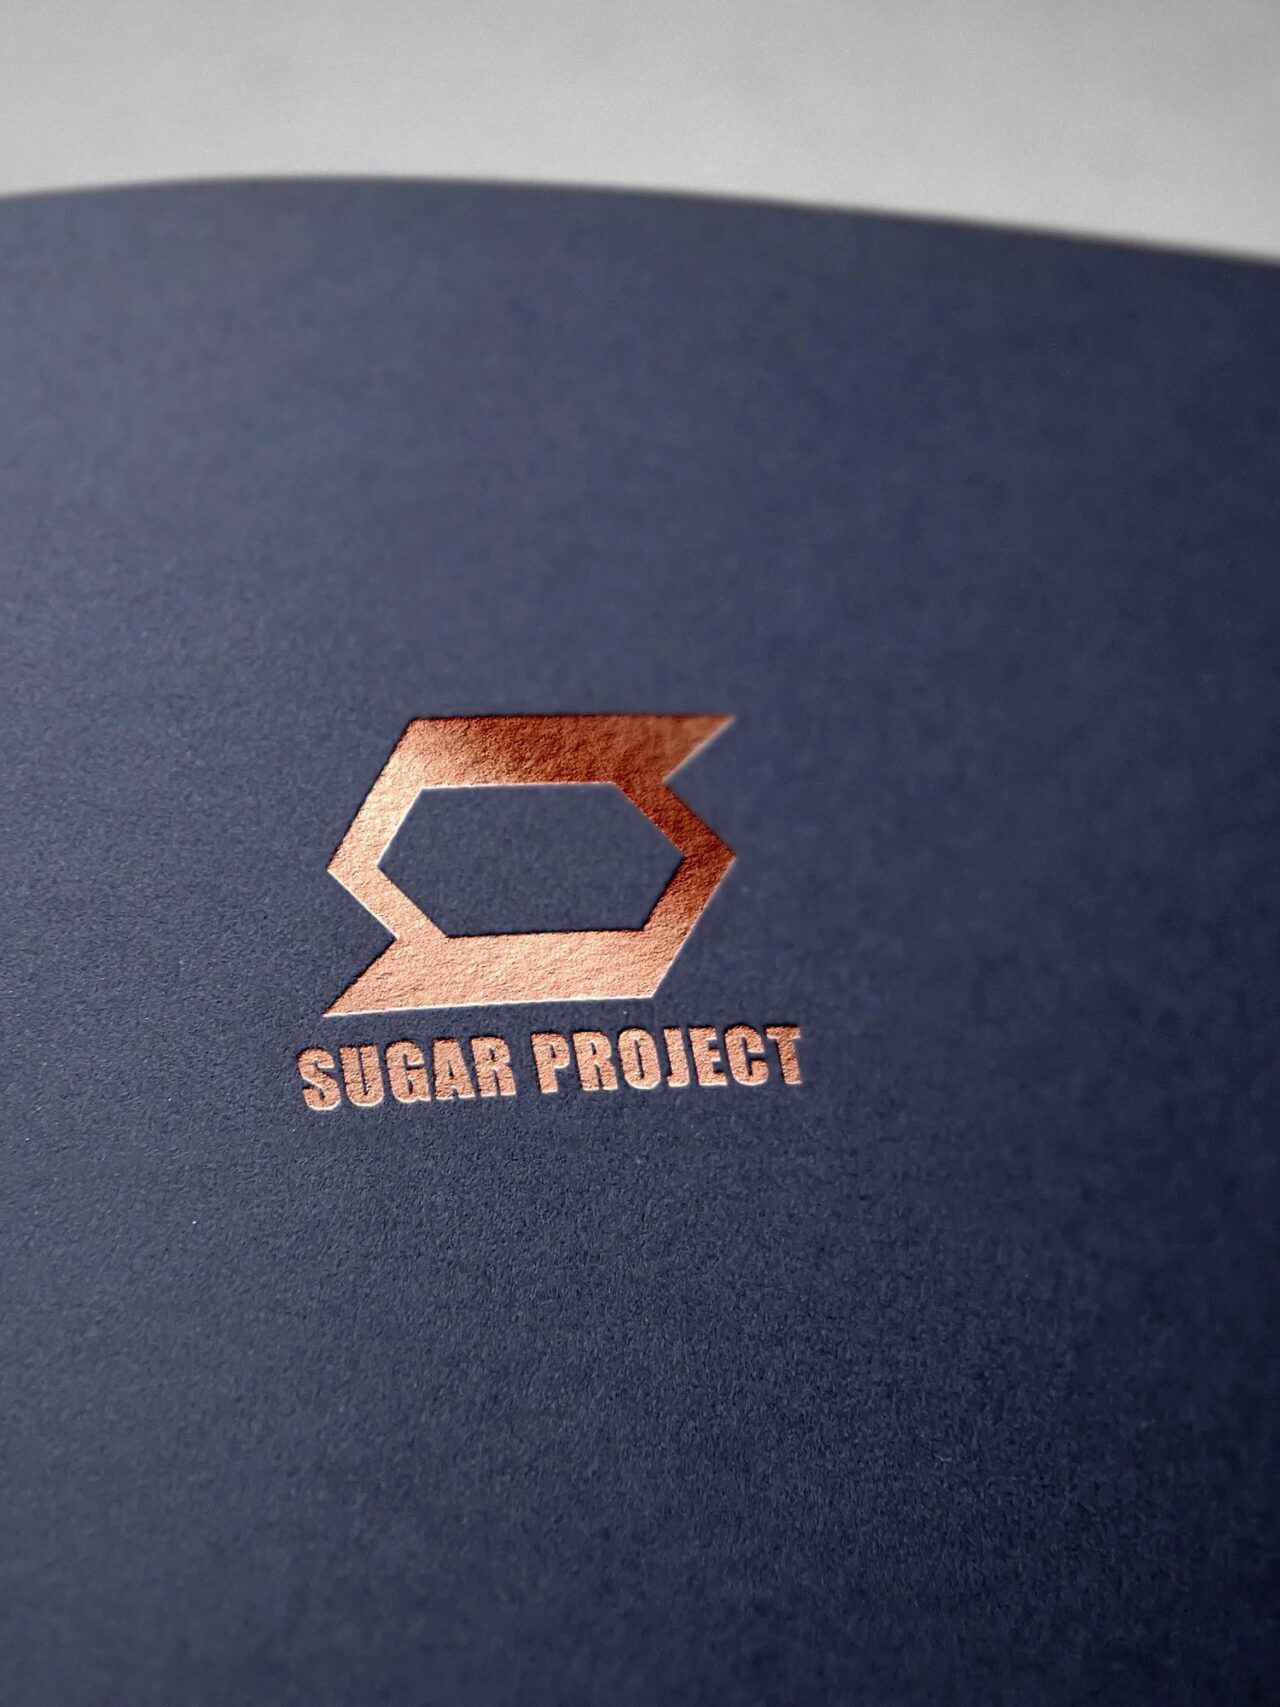 Sugar Project Mockup 01 Perfectlyclear